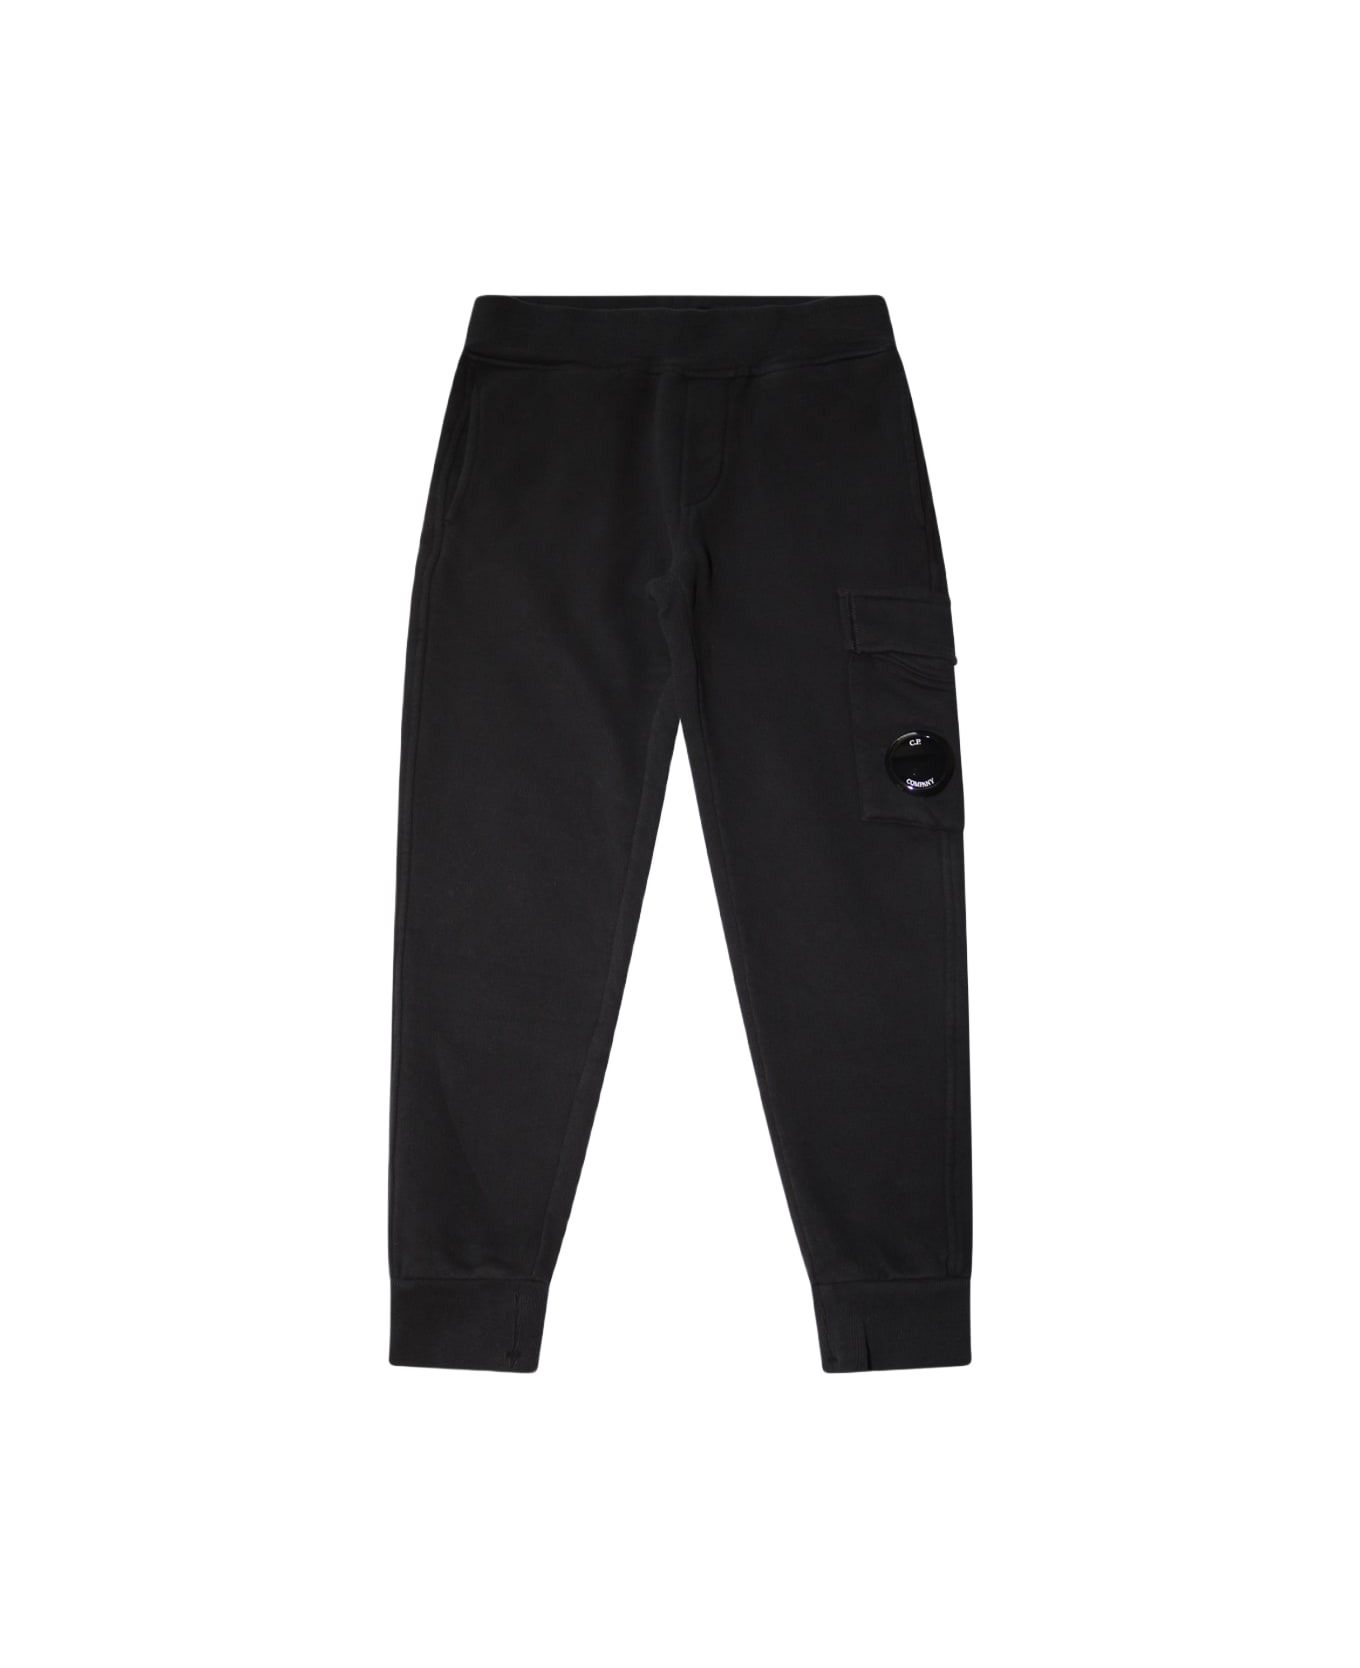 C.P. Company Black Cotton Pants - NERO/BLACK